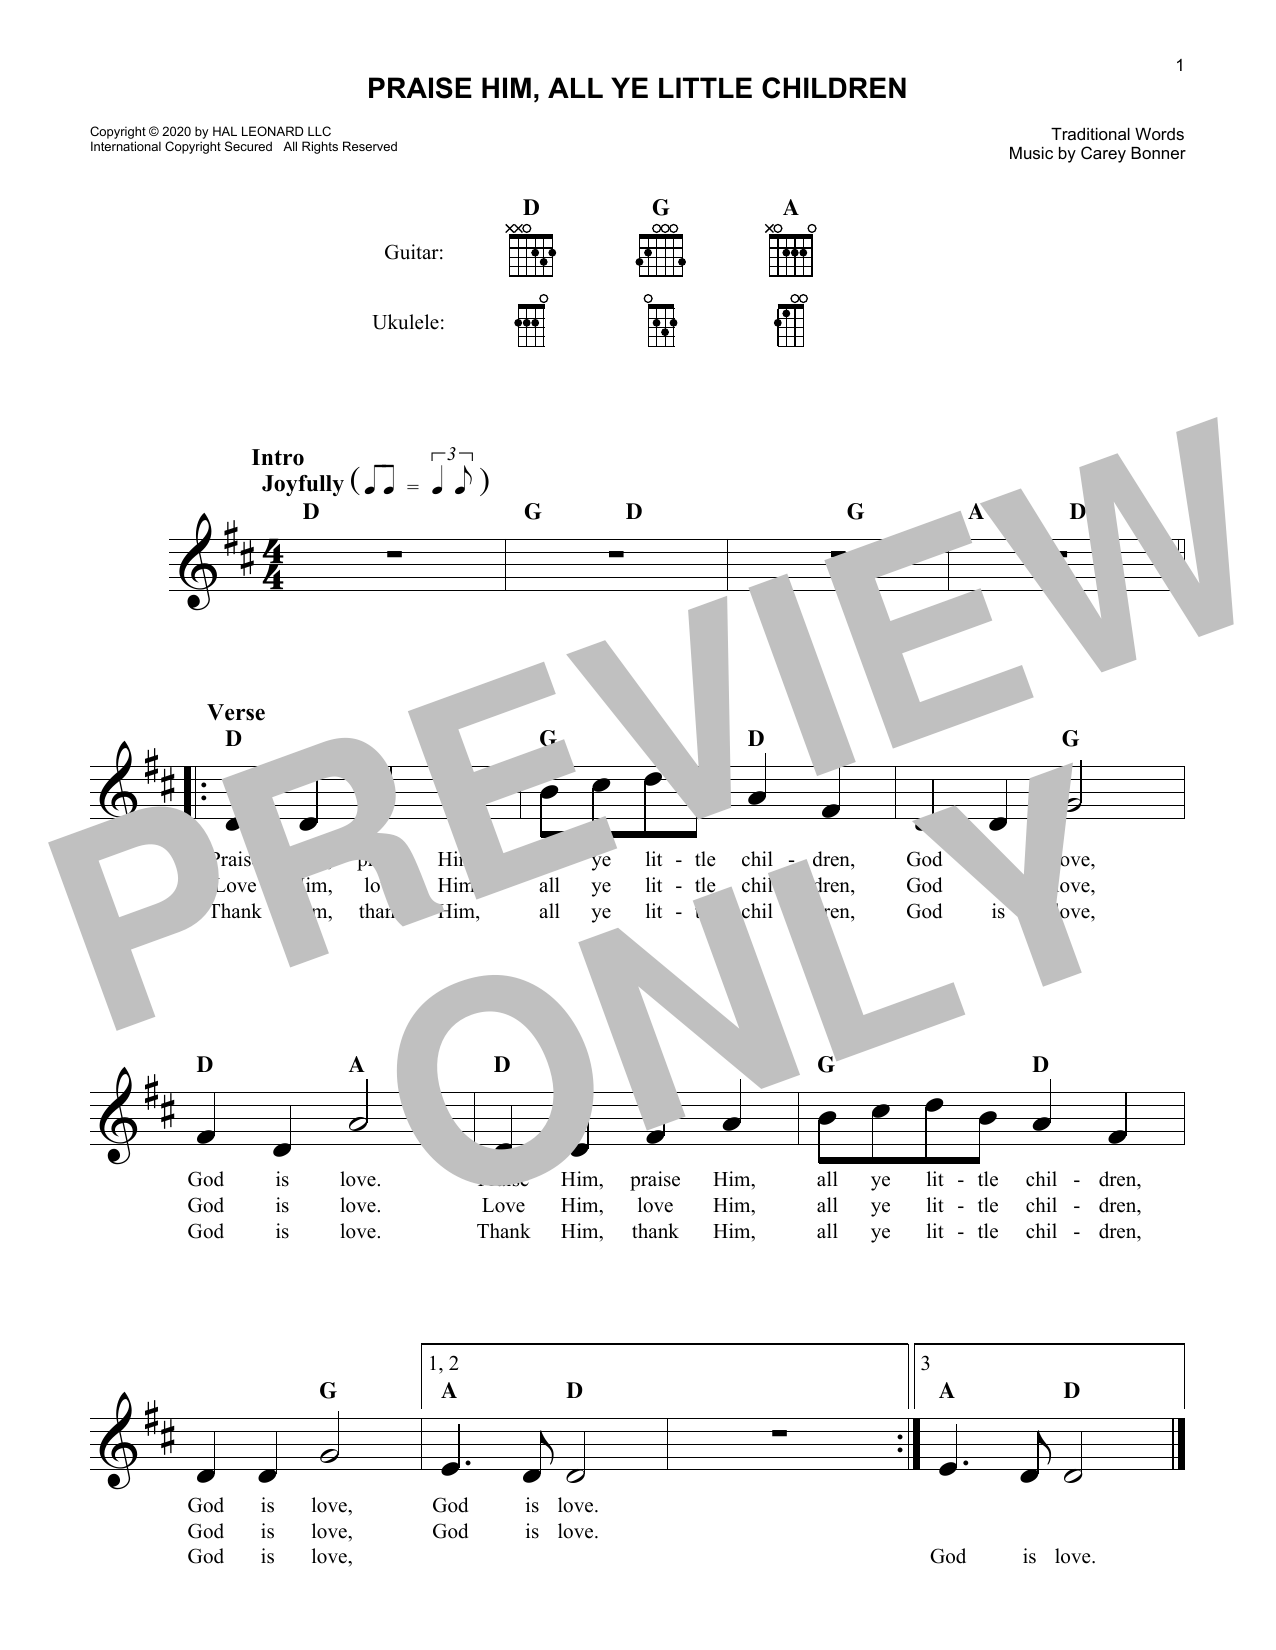 Carey Bonner Praise Him, All Ye Little Children Sheet Music Notes & Chords for Lead Sheet / Fake Book - Download or Print PDF